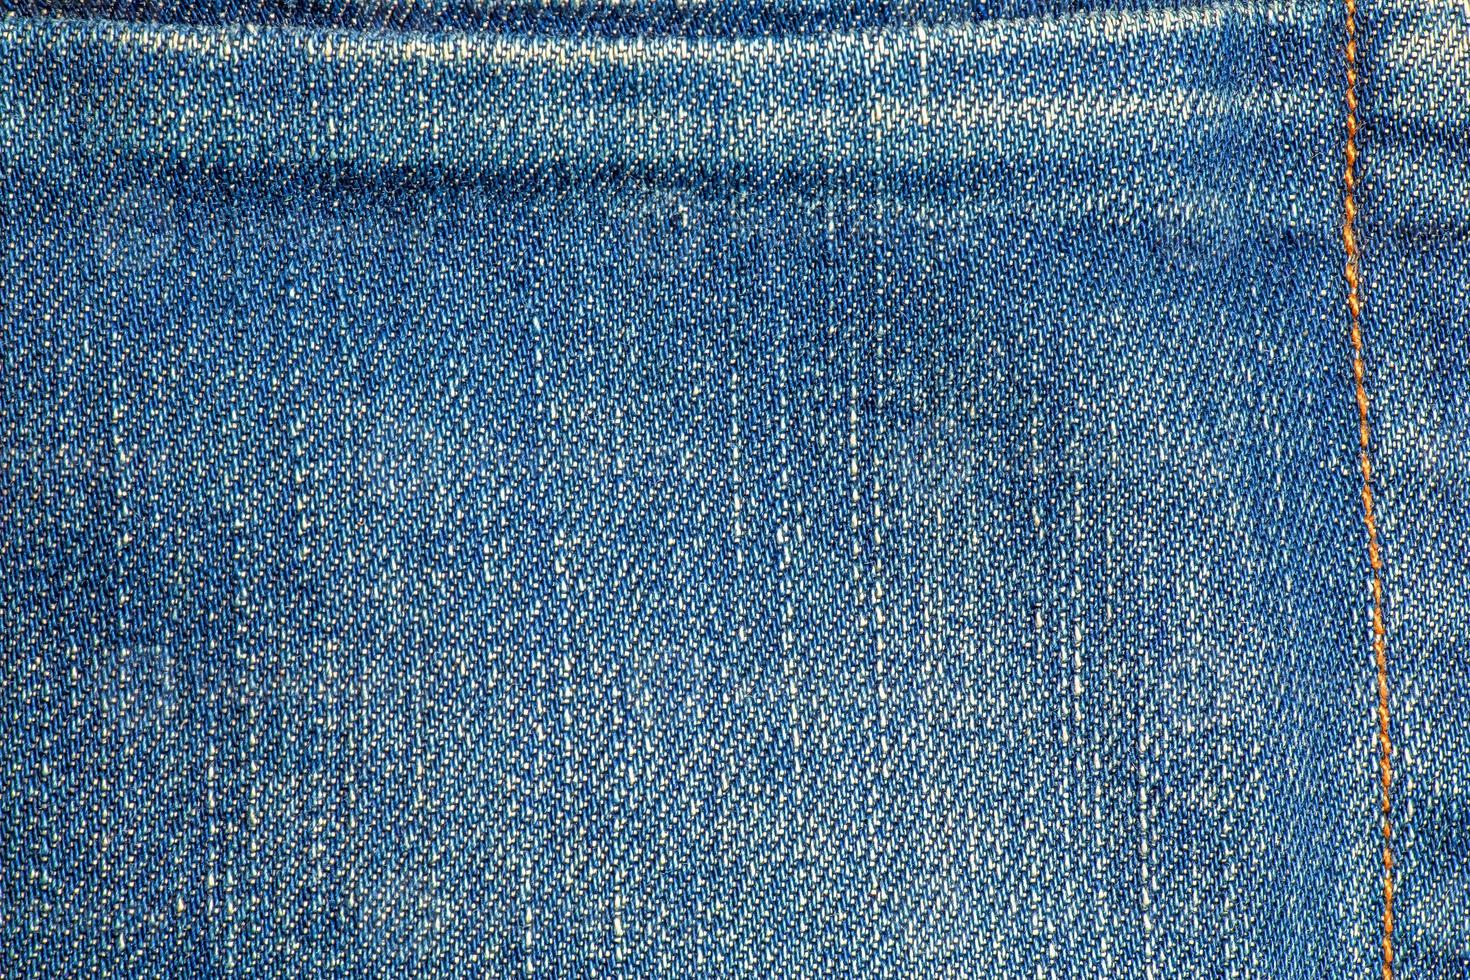 Textured old blue worn jeans - trendy jeans design. Details. photo